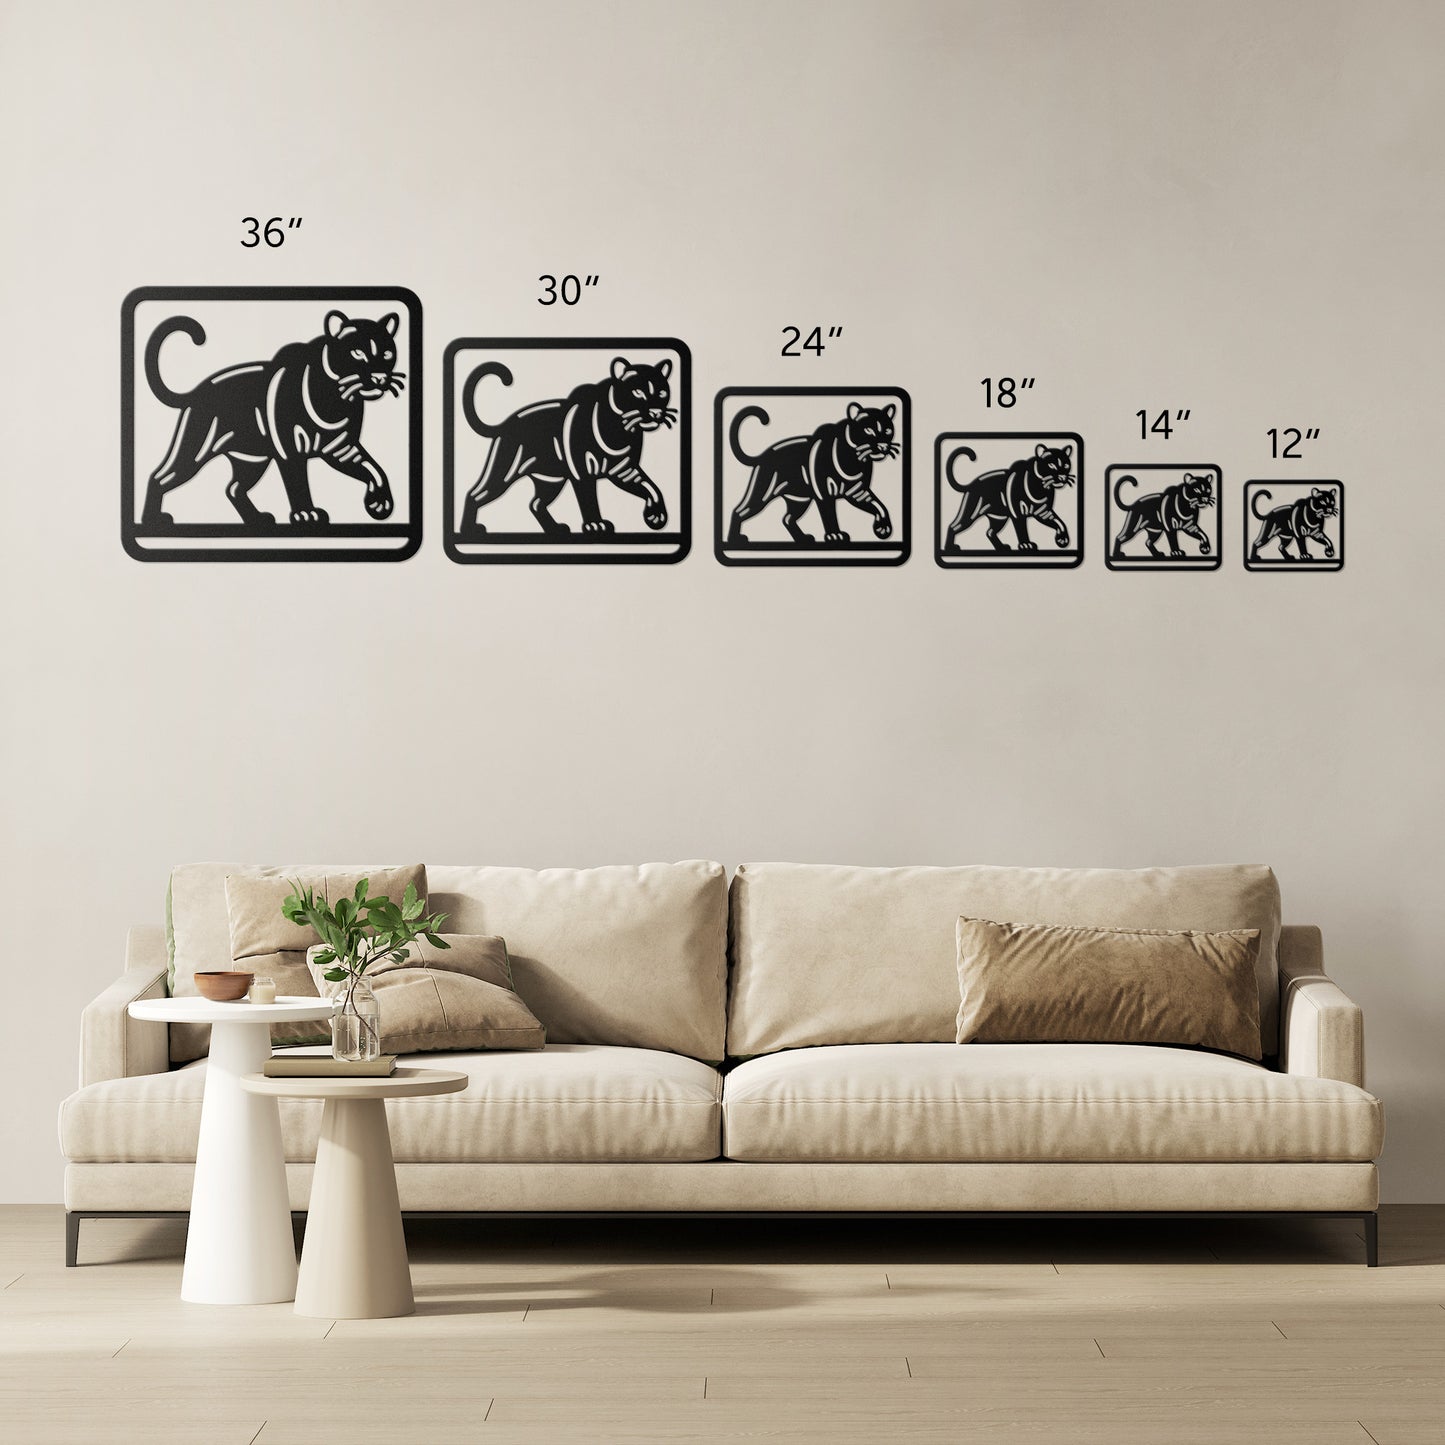 Wild Animals - Die-Cut Metal Wall Art - The Black Panther #8